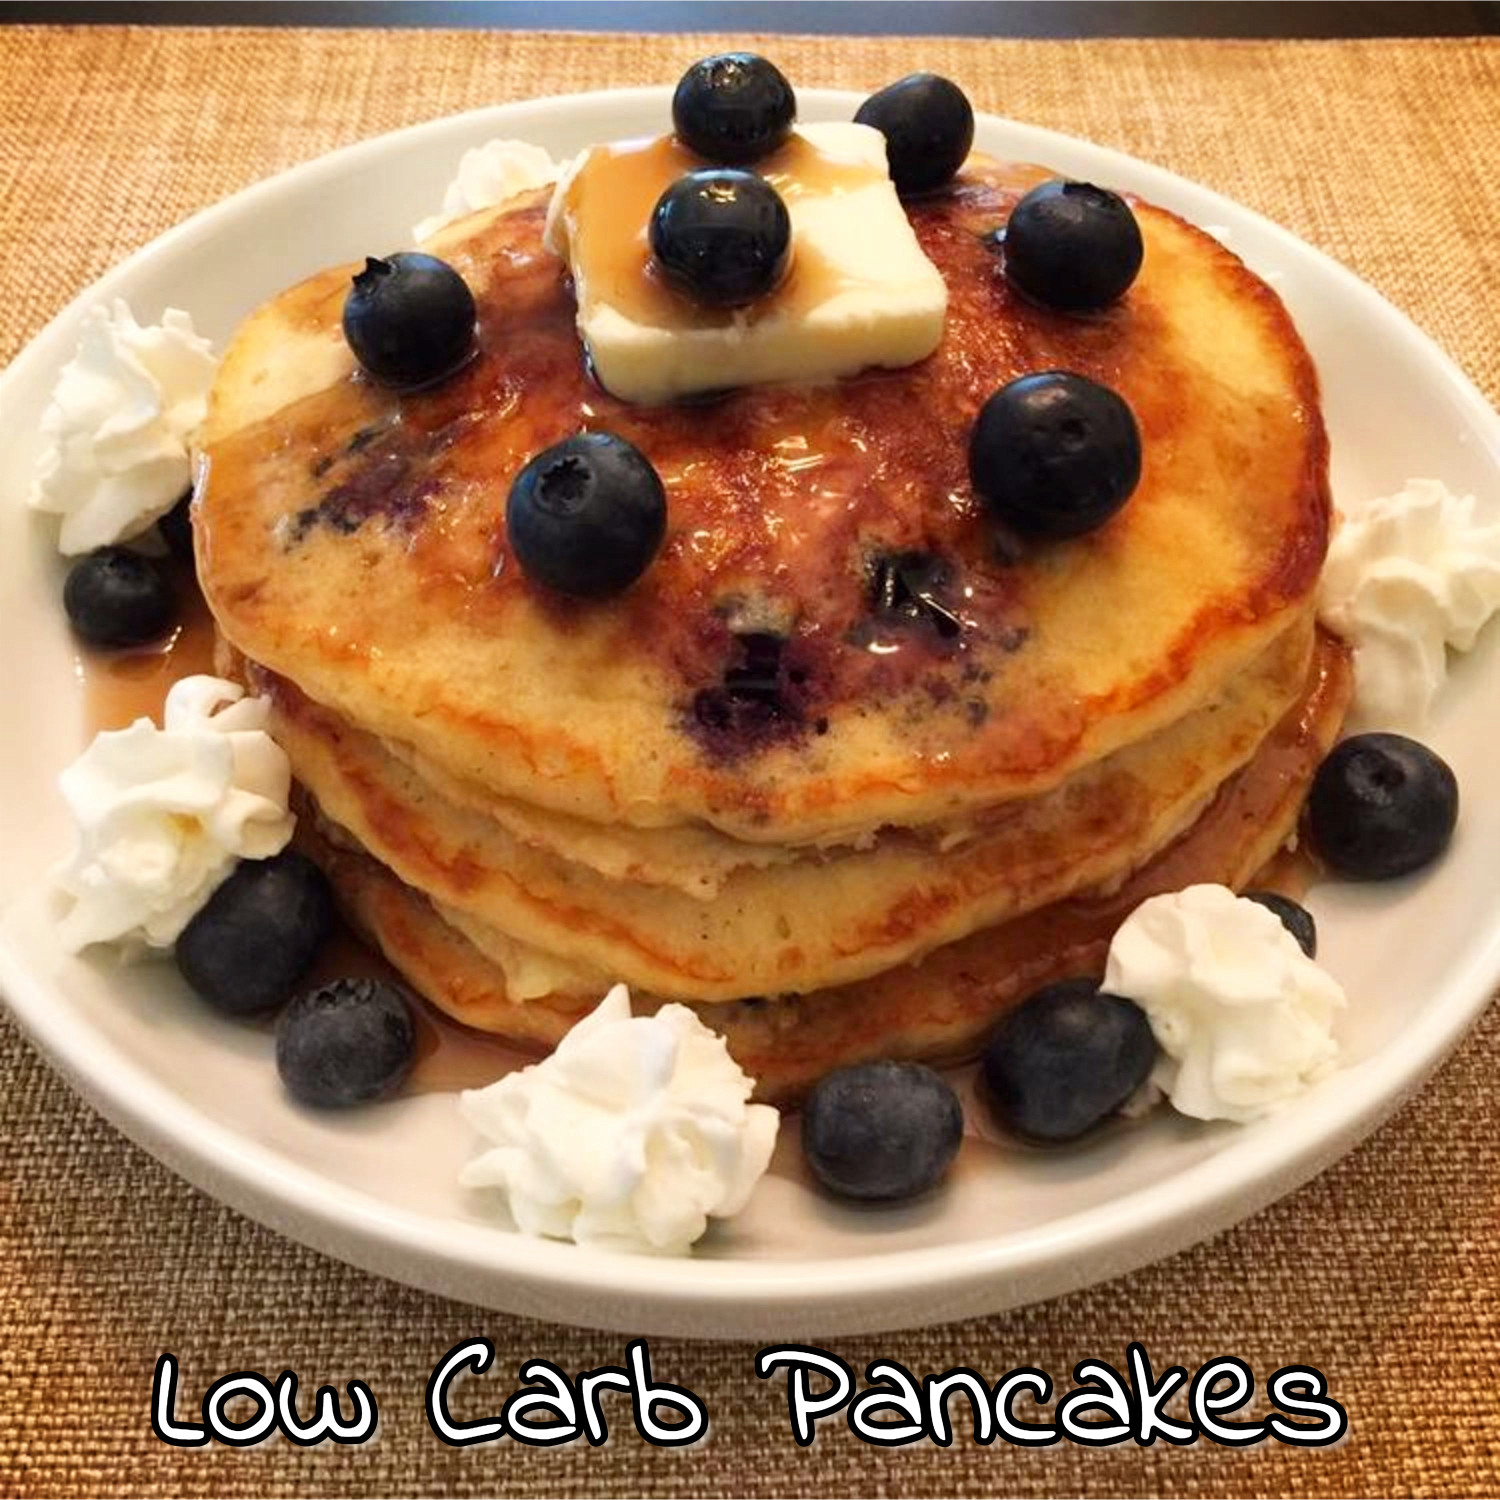 Low carb pancakes recipe - delicious! #lowcarbrecipes #ketogenicdiet #ketorecipes #lowcarbmeals #healthysnacks #healthydinnerrecipes #chickenrecipes #easydinnerrecipes #mealpreprecipes #ketosnacks